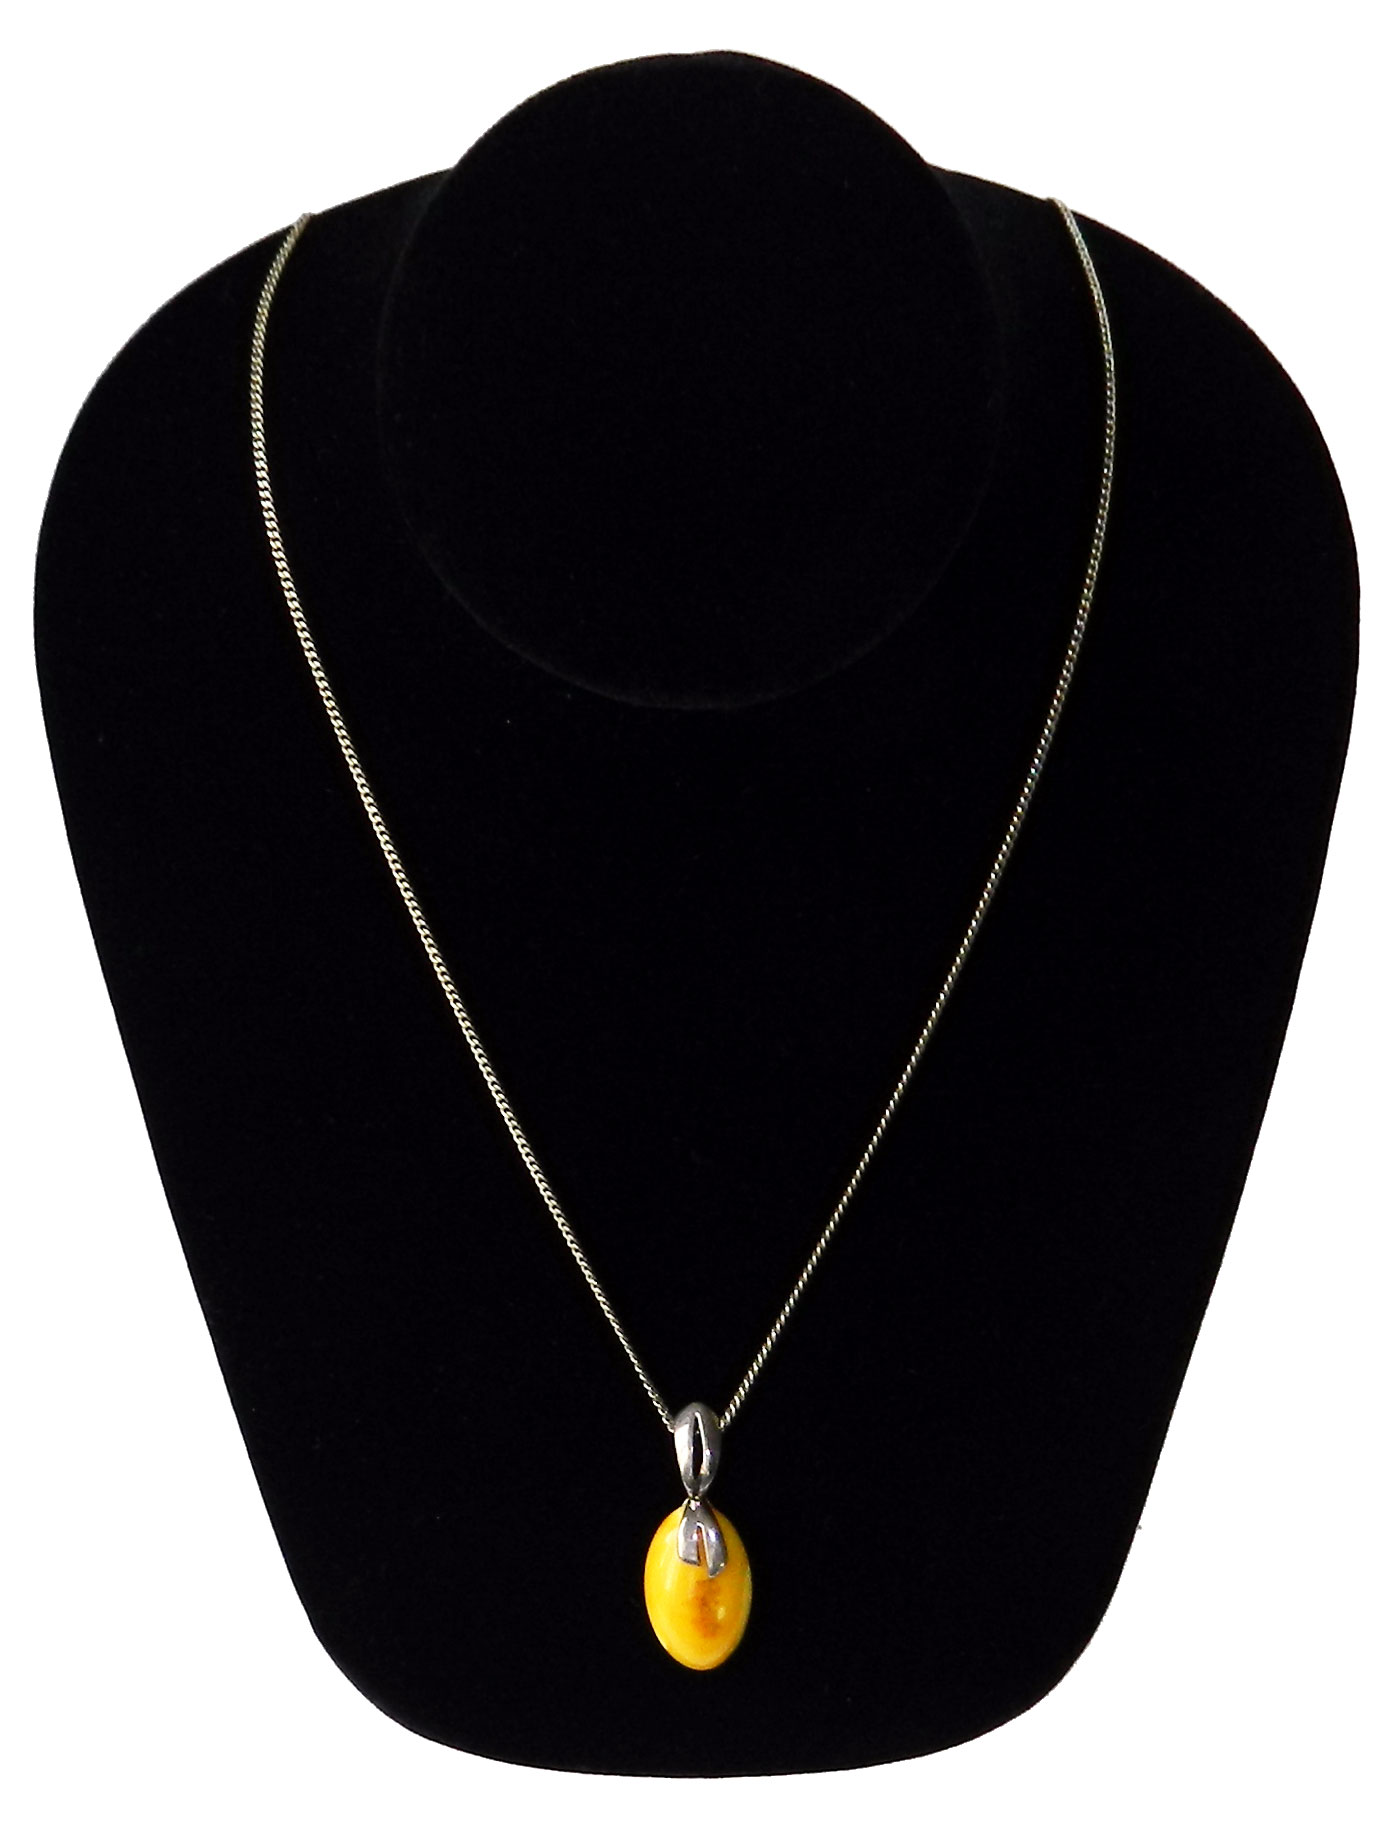 Egg yolk amber pendant necklace